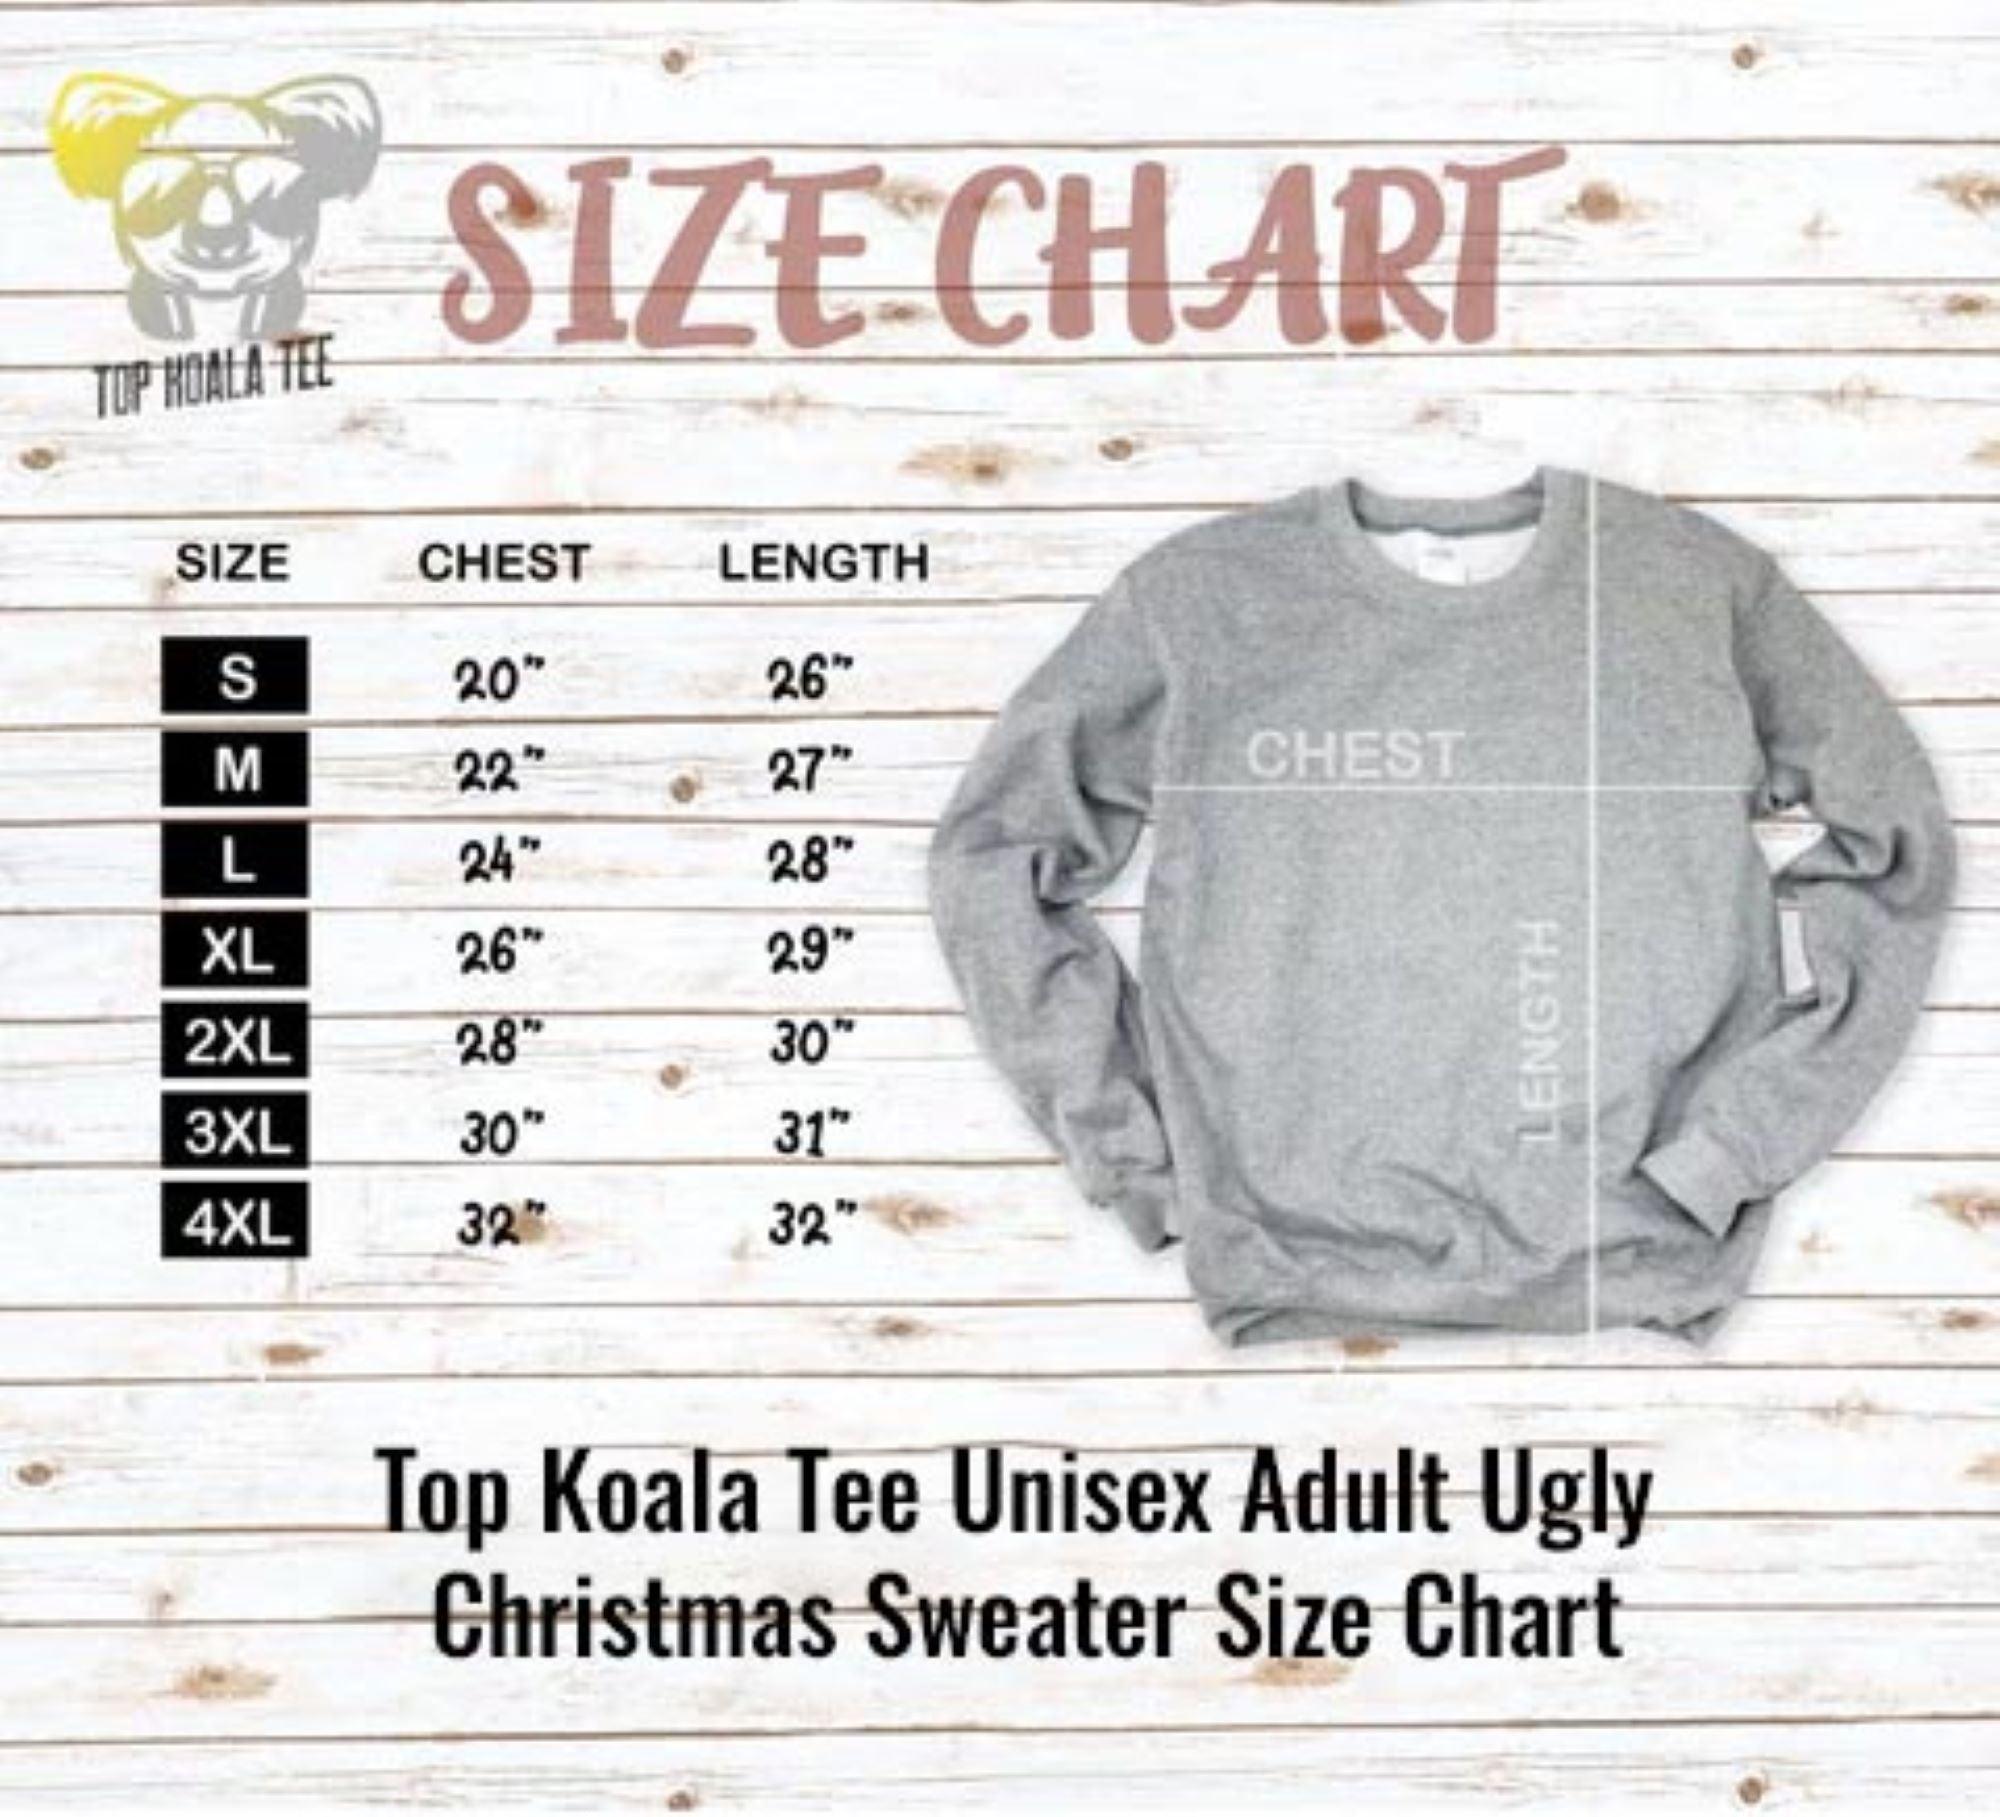 I'll Be 30 for Christmas Unisex Ugly Christmas Sweater - TopKoalaTee